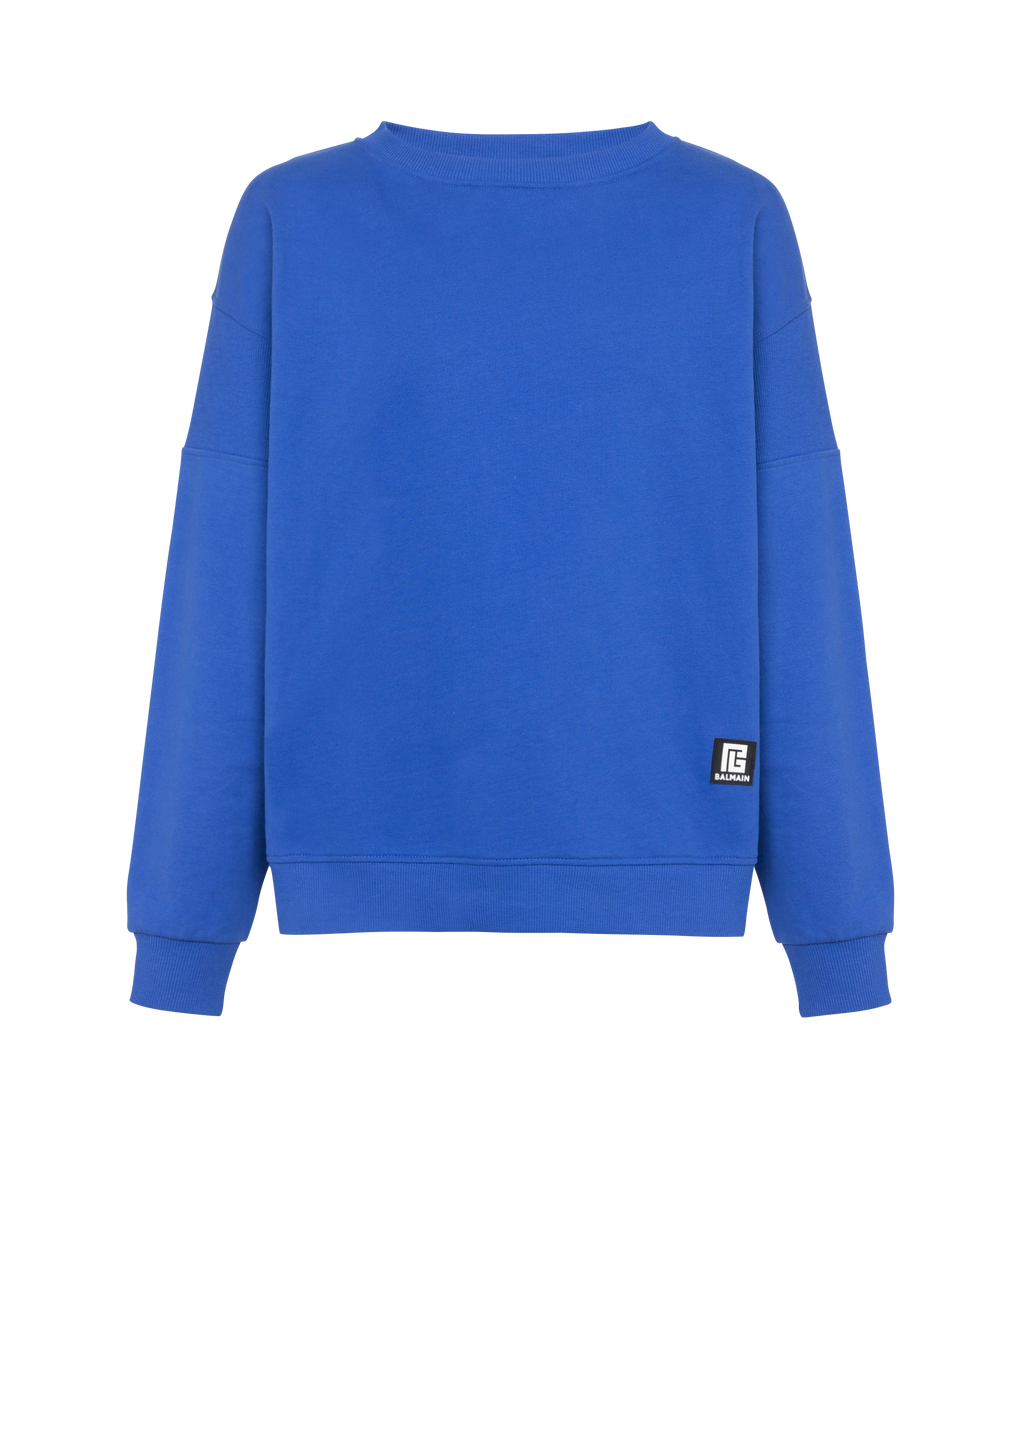 Sweatshirt aus Baumwolle mit Balmain Logo-Print, marineblau, hi-res